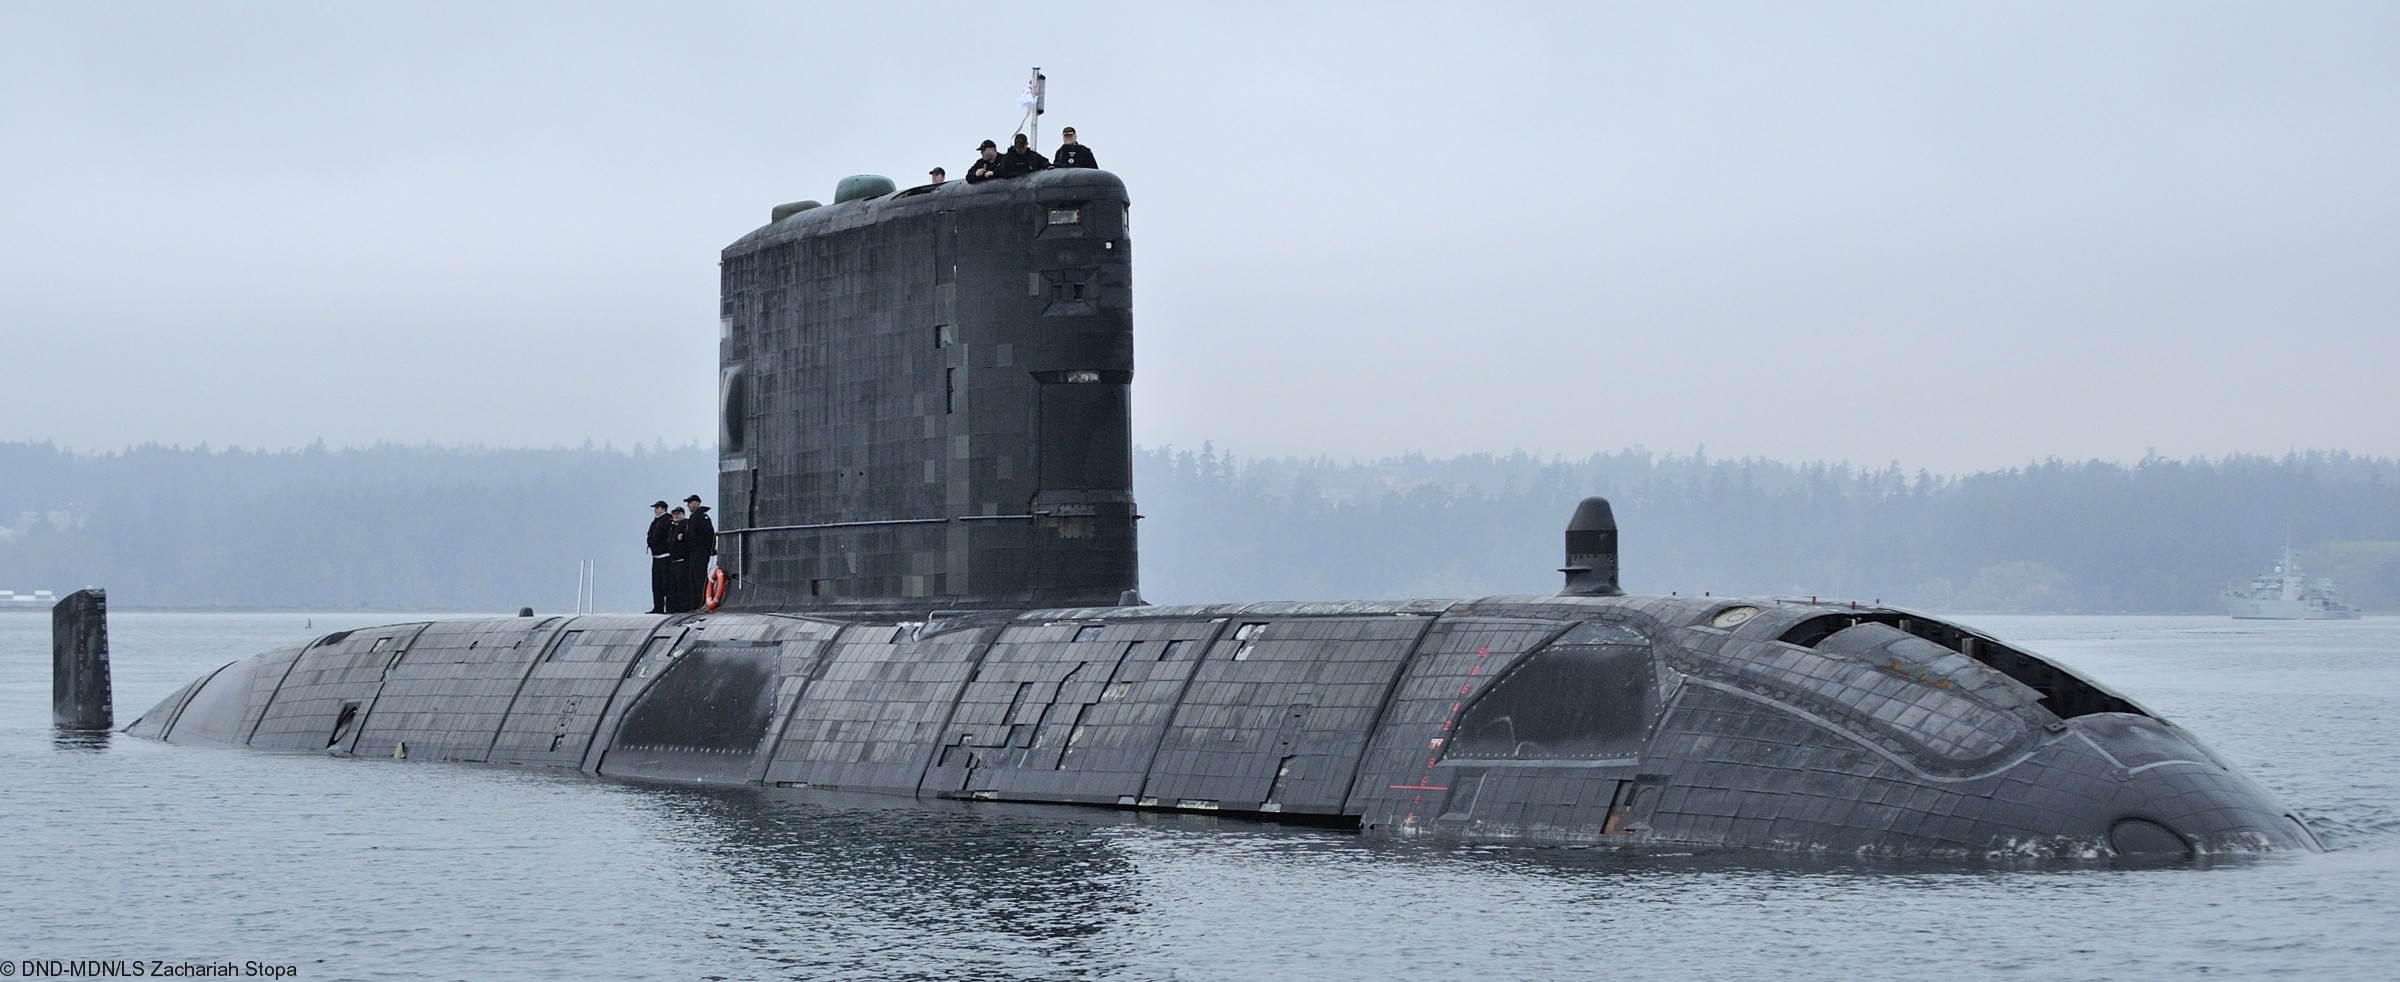 ssk-876 hmcs victoria upholder class attack submarine hunter killer ncsm royal canadian navy 19